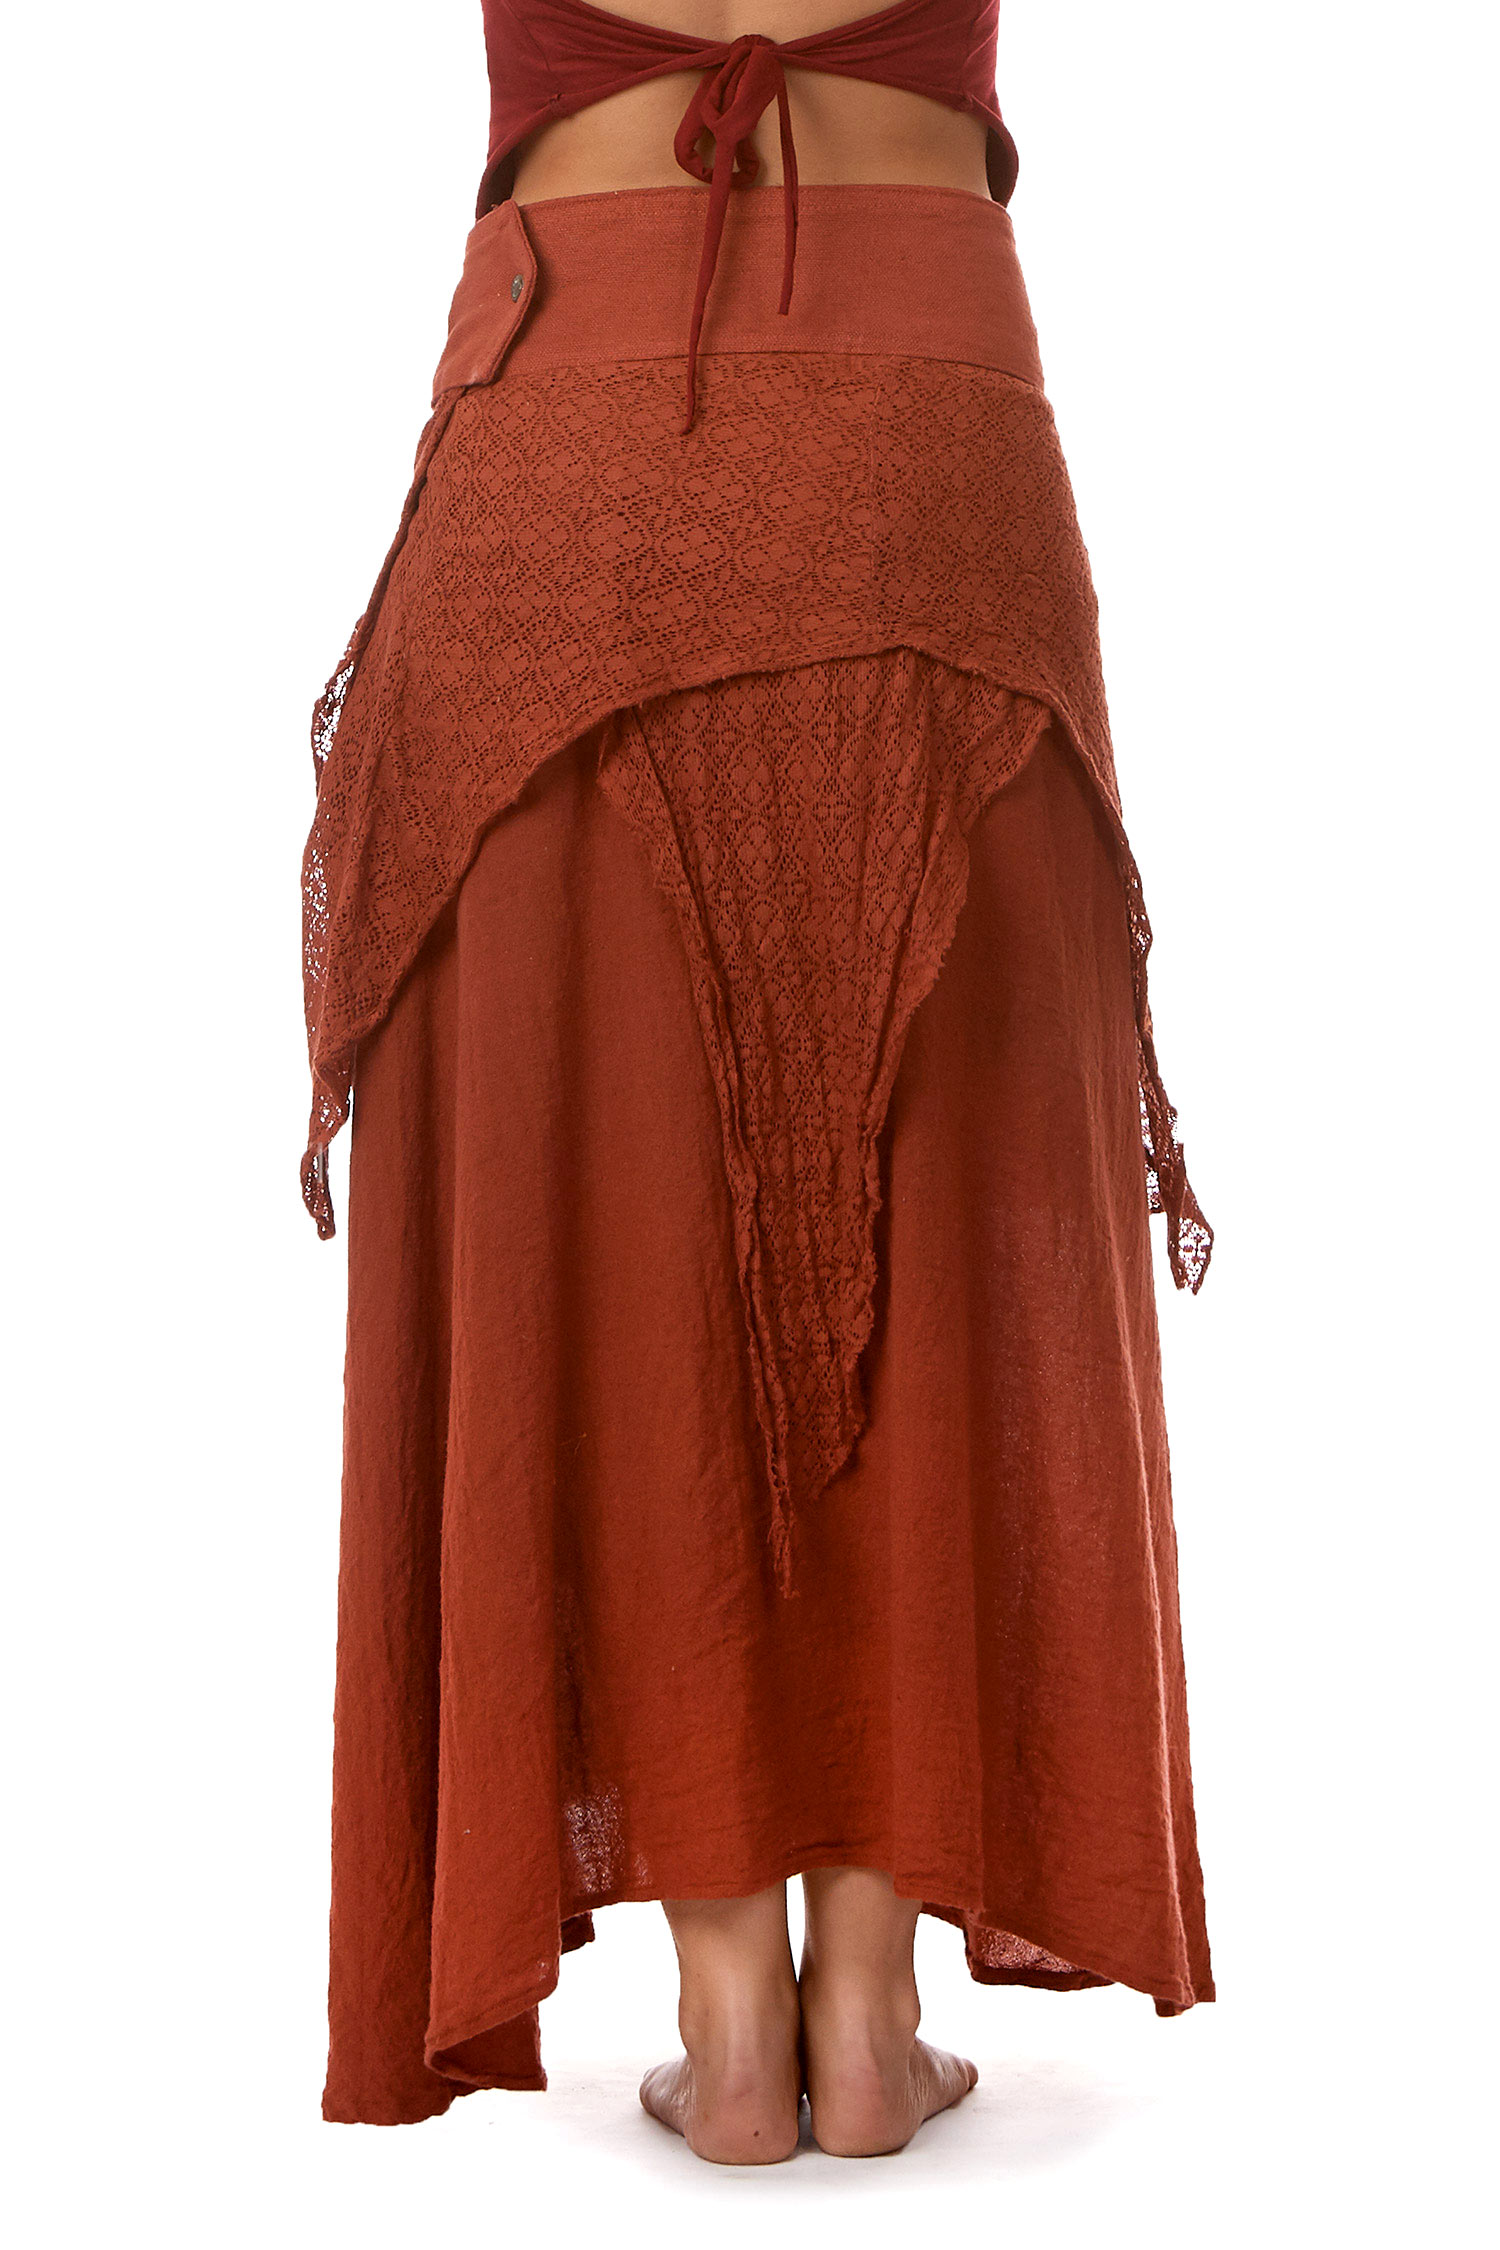 Jute and Lace Long Layered Goa Skirt | Altshop UK